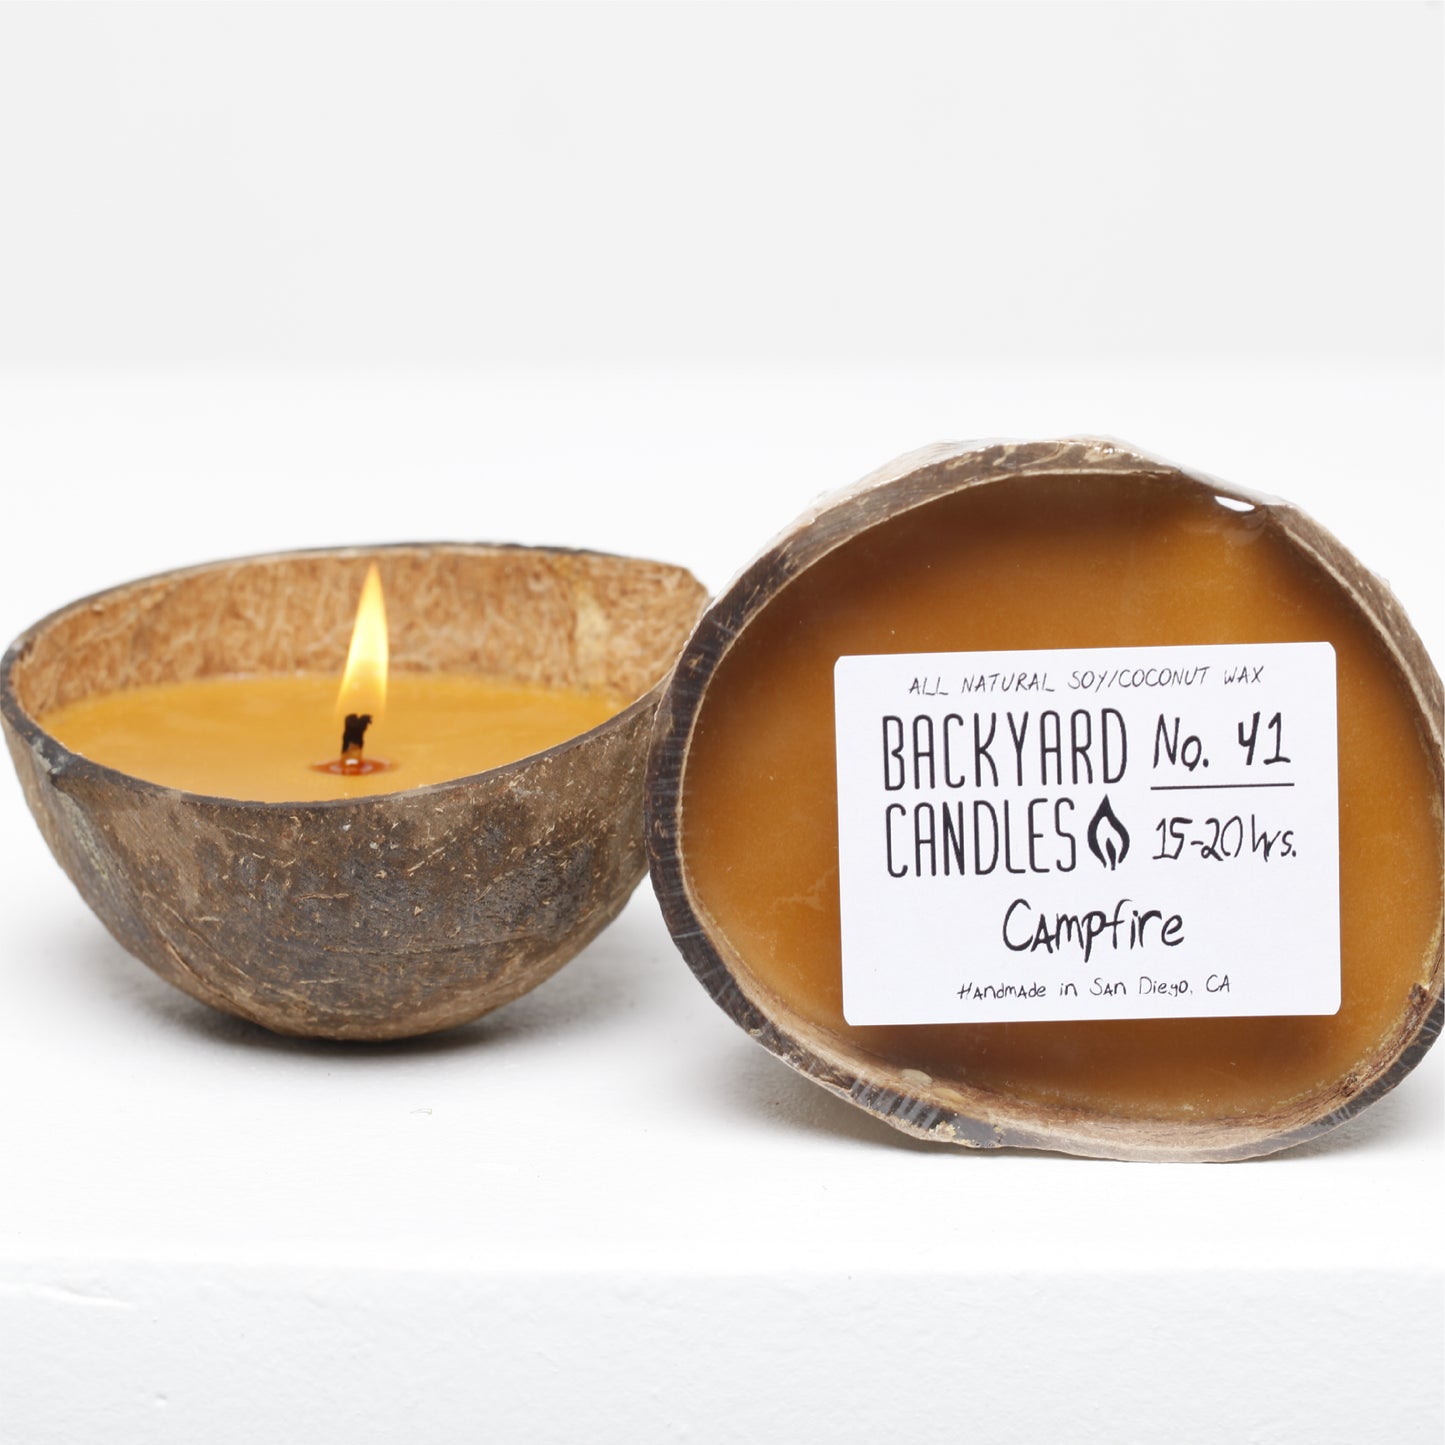 WoodWick Fireside Medium Candle - 10 oz